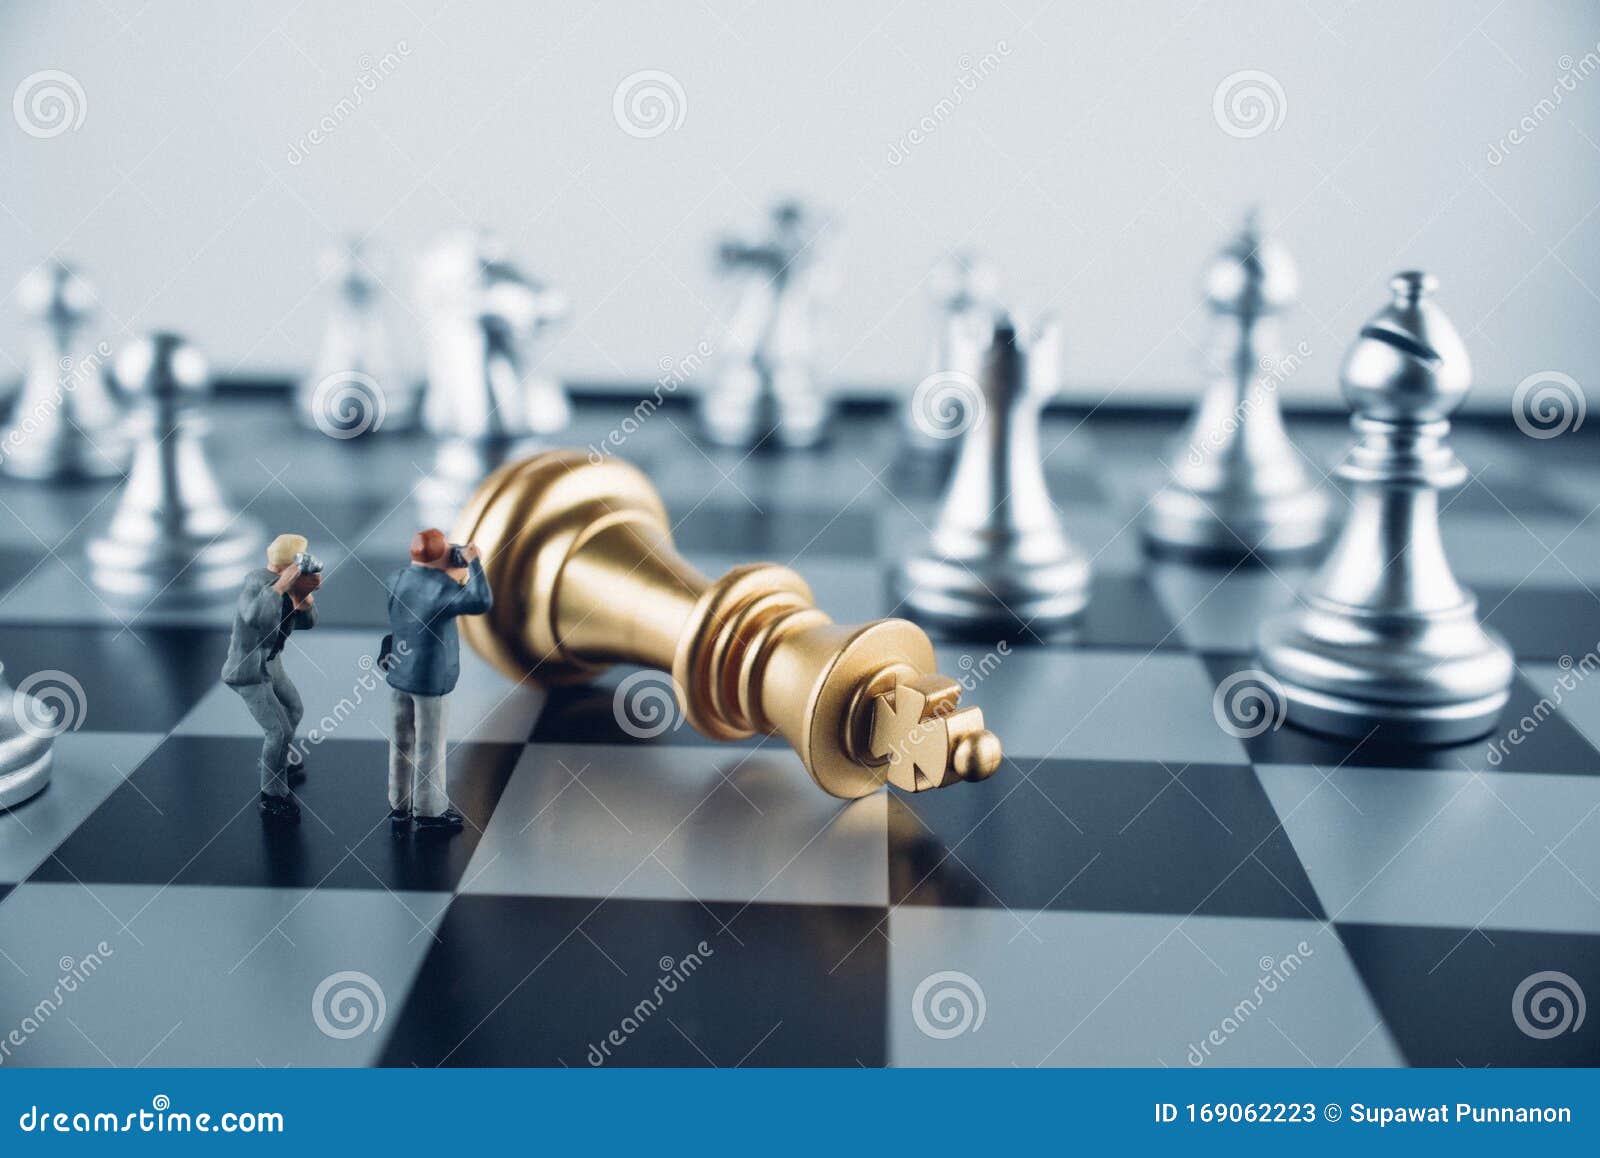 Xadrez - Um jogo de liderança